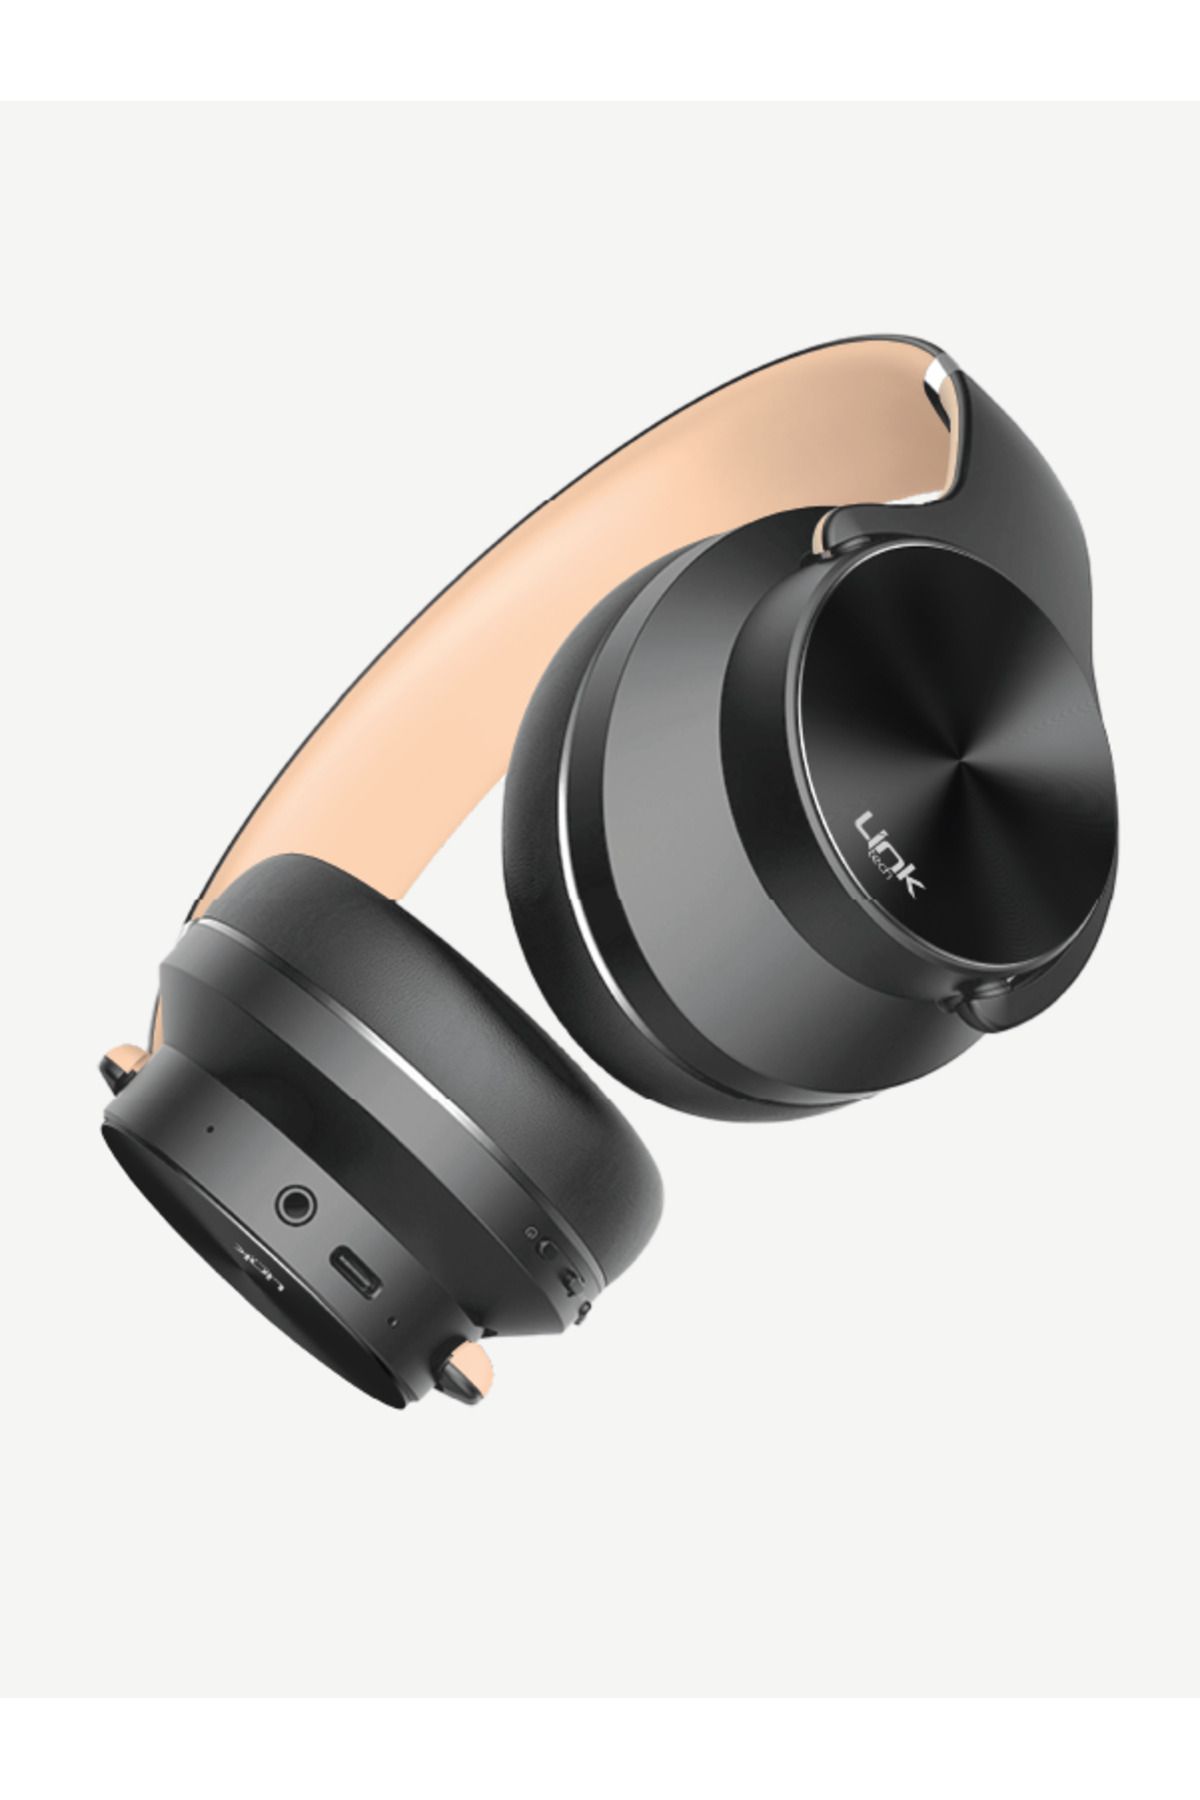 Linktech HP6 Plus Premium 2'si 1 Arada Süper Bas Kulak Üstü Bluetooth Kulaklık ve Hoparlör